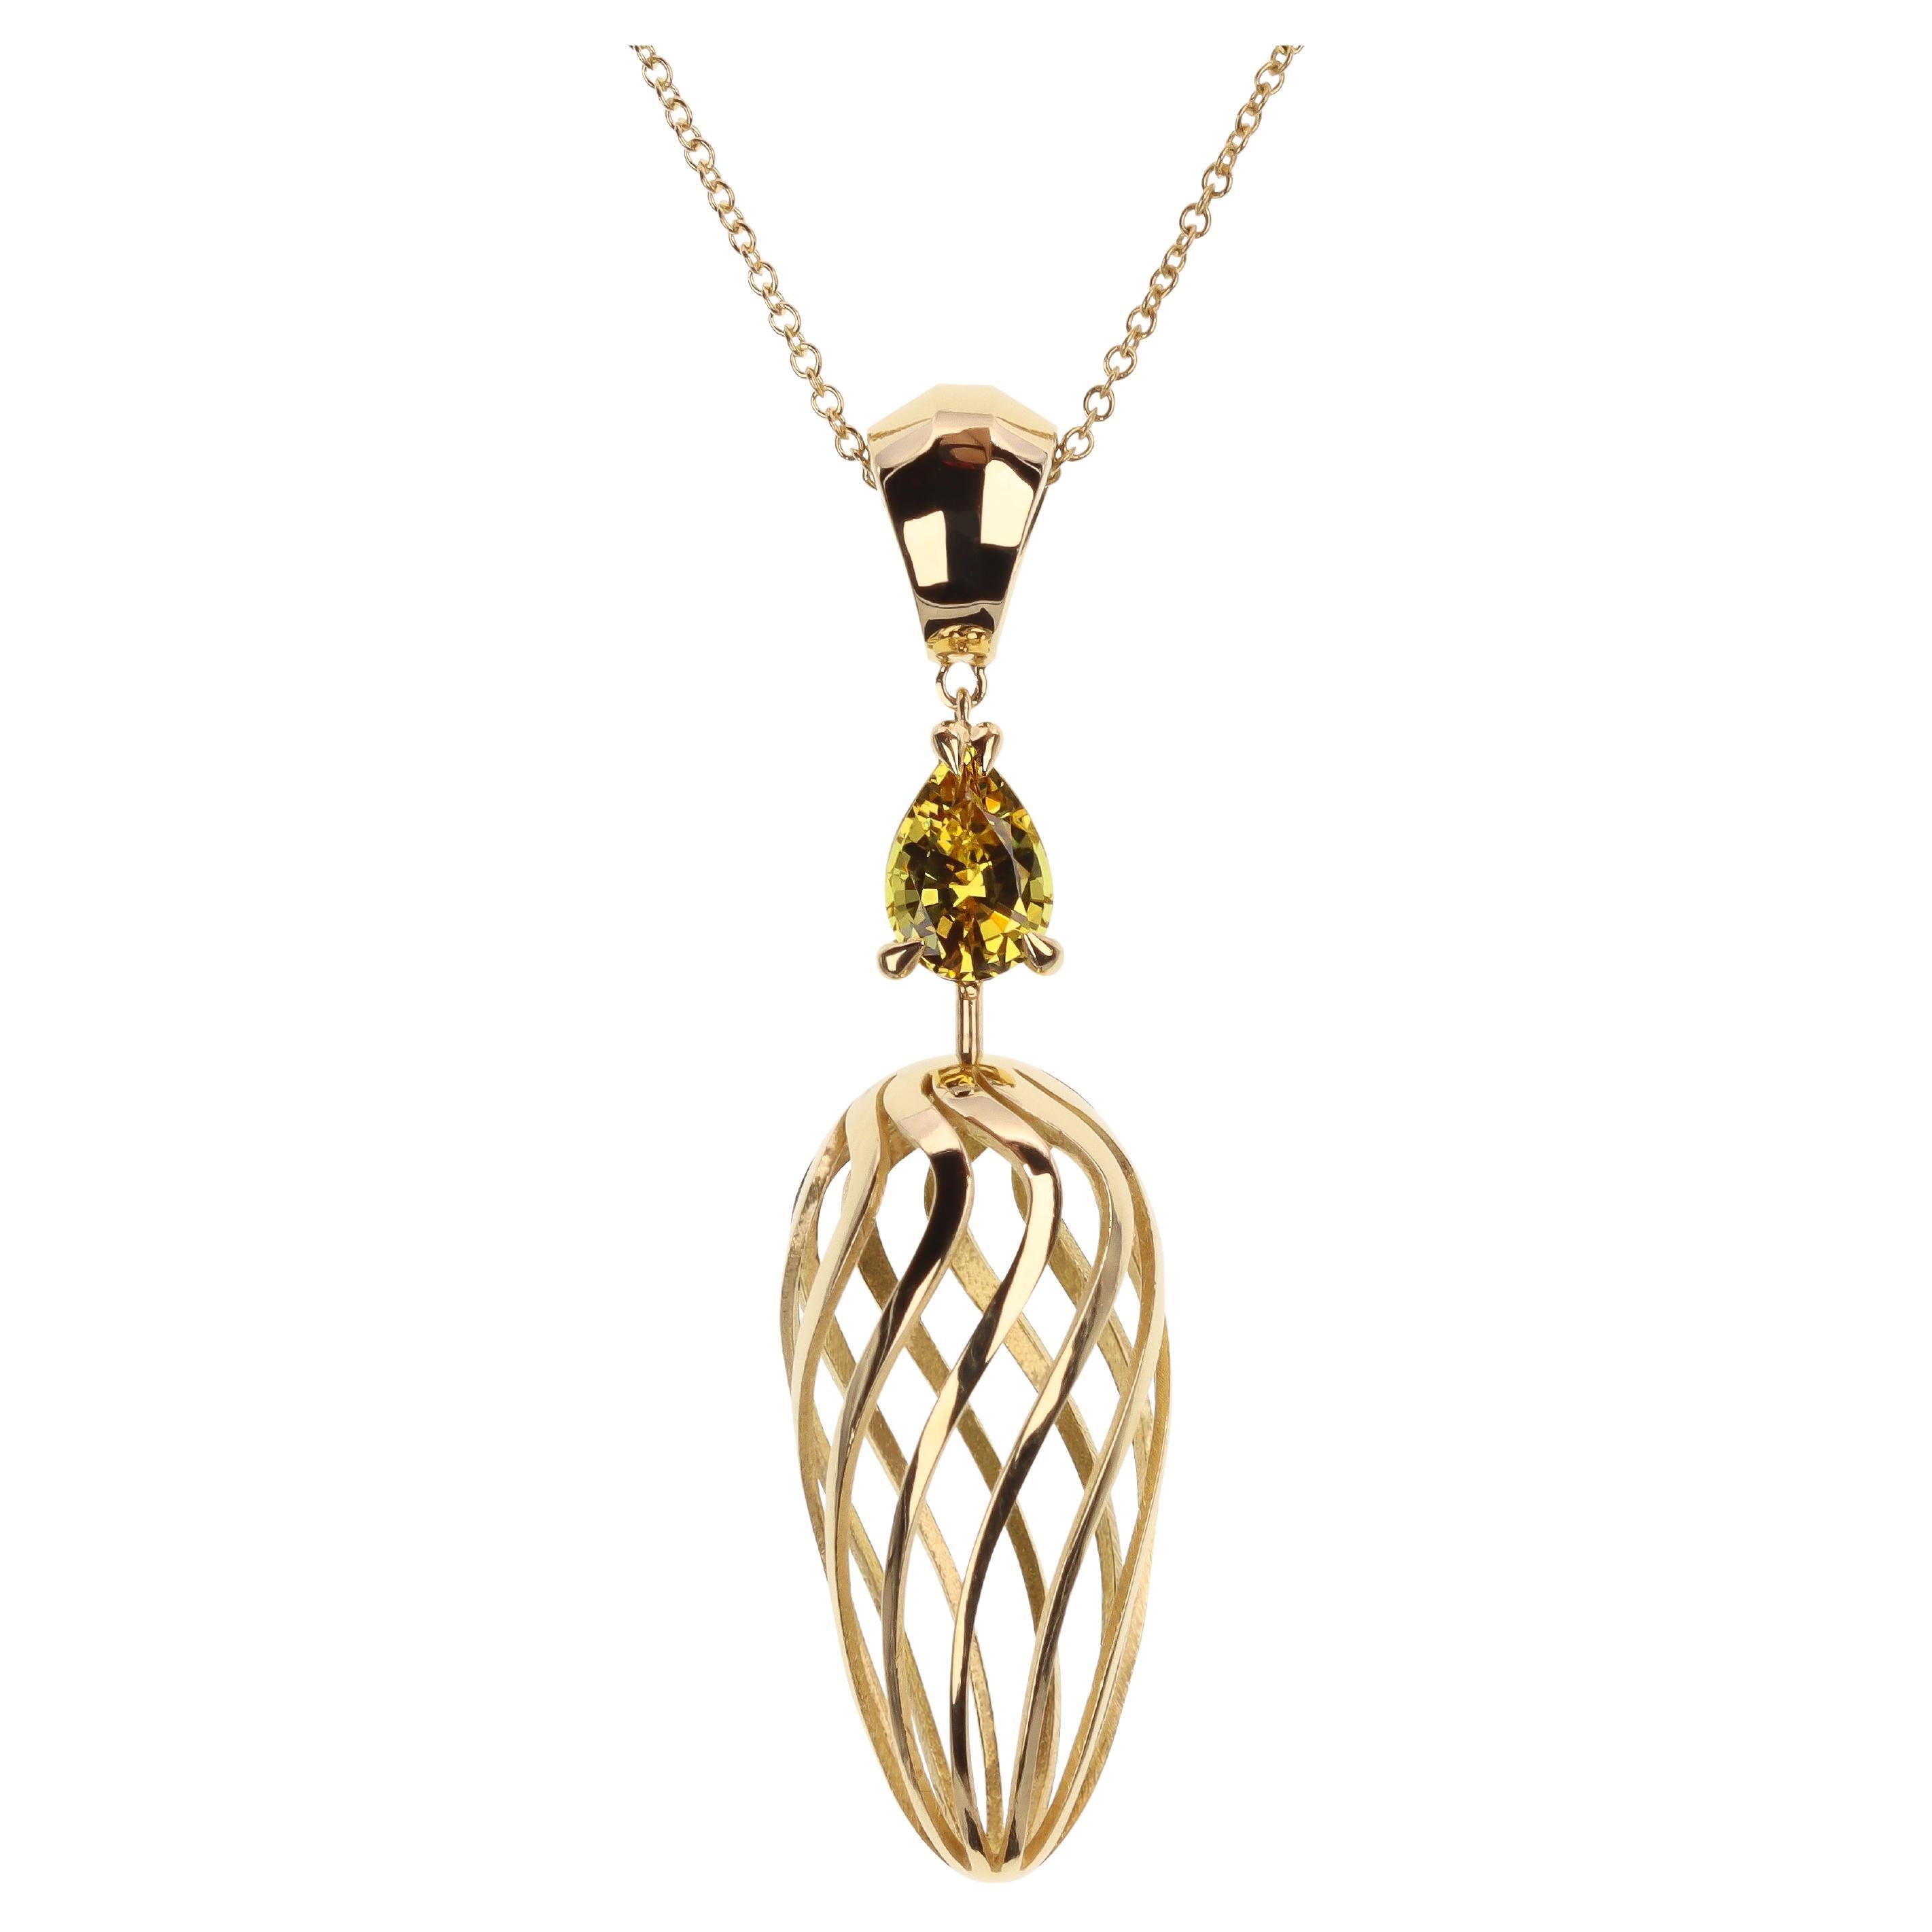 Aventina-Spencer, "Trellis", 1.25 Ct Vivid Yellow Sapphire and 18k Gold Pendant